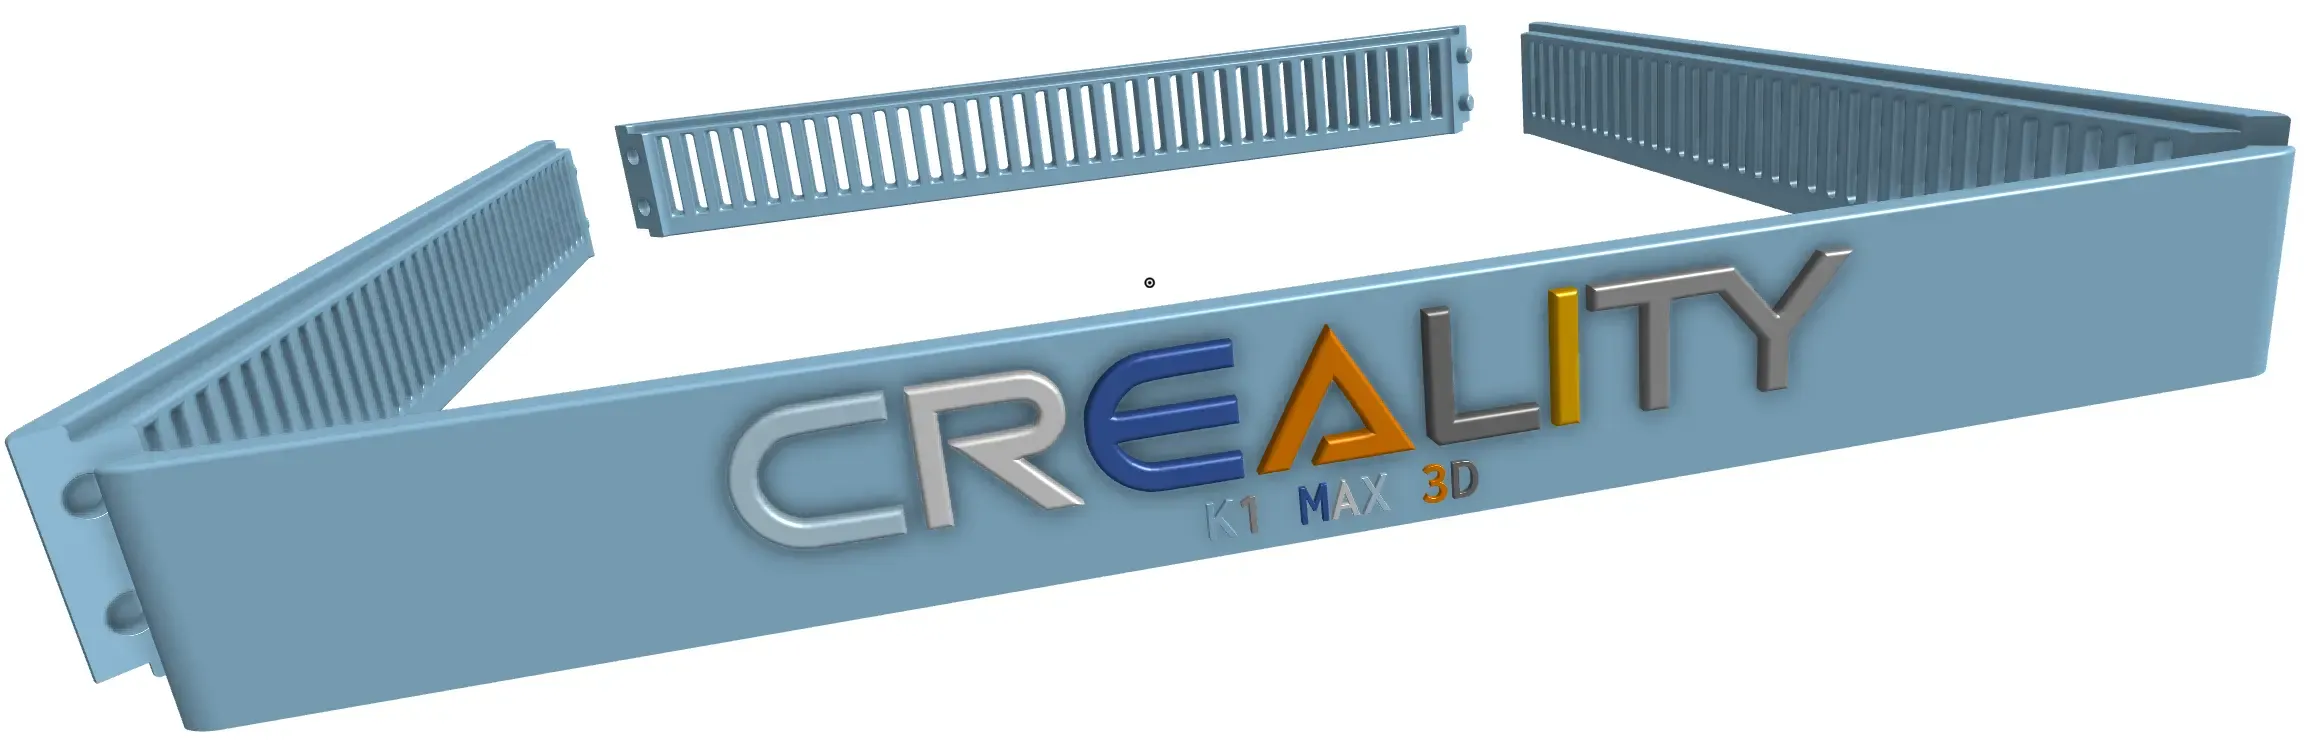 Creality K1 Max 3D - Vented Lid Riser (45mm)